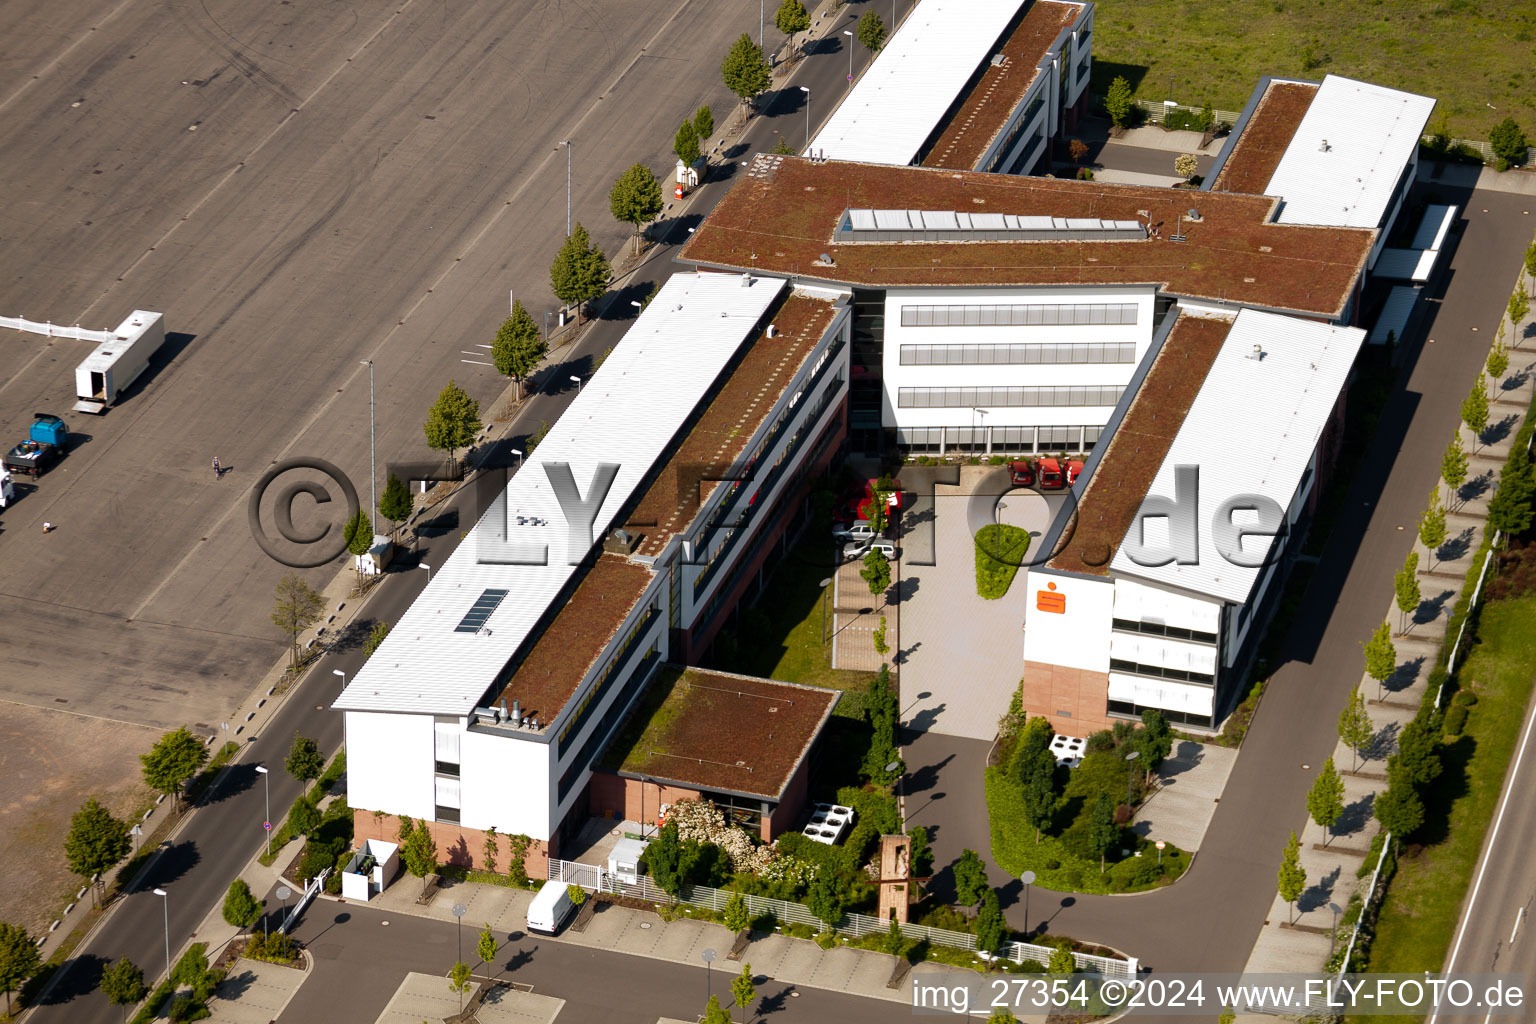 Drone image of District Queichheim in Landau in der Pfalz in the state Rhineland-Palatinate, Germany